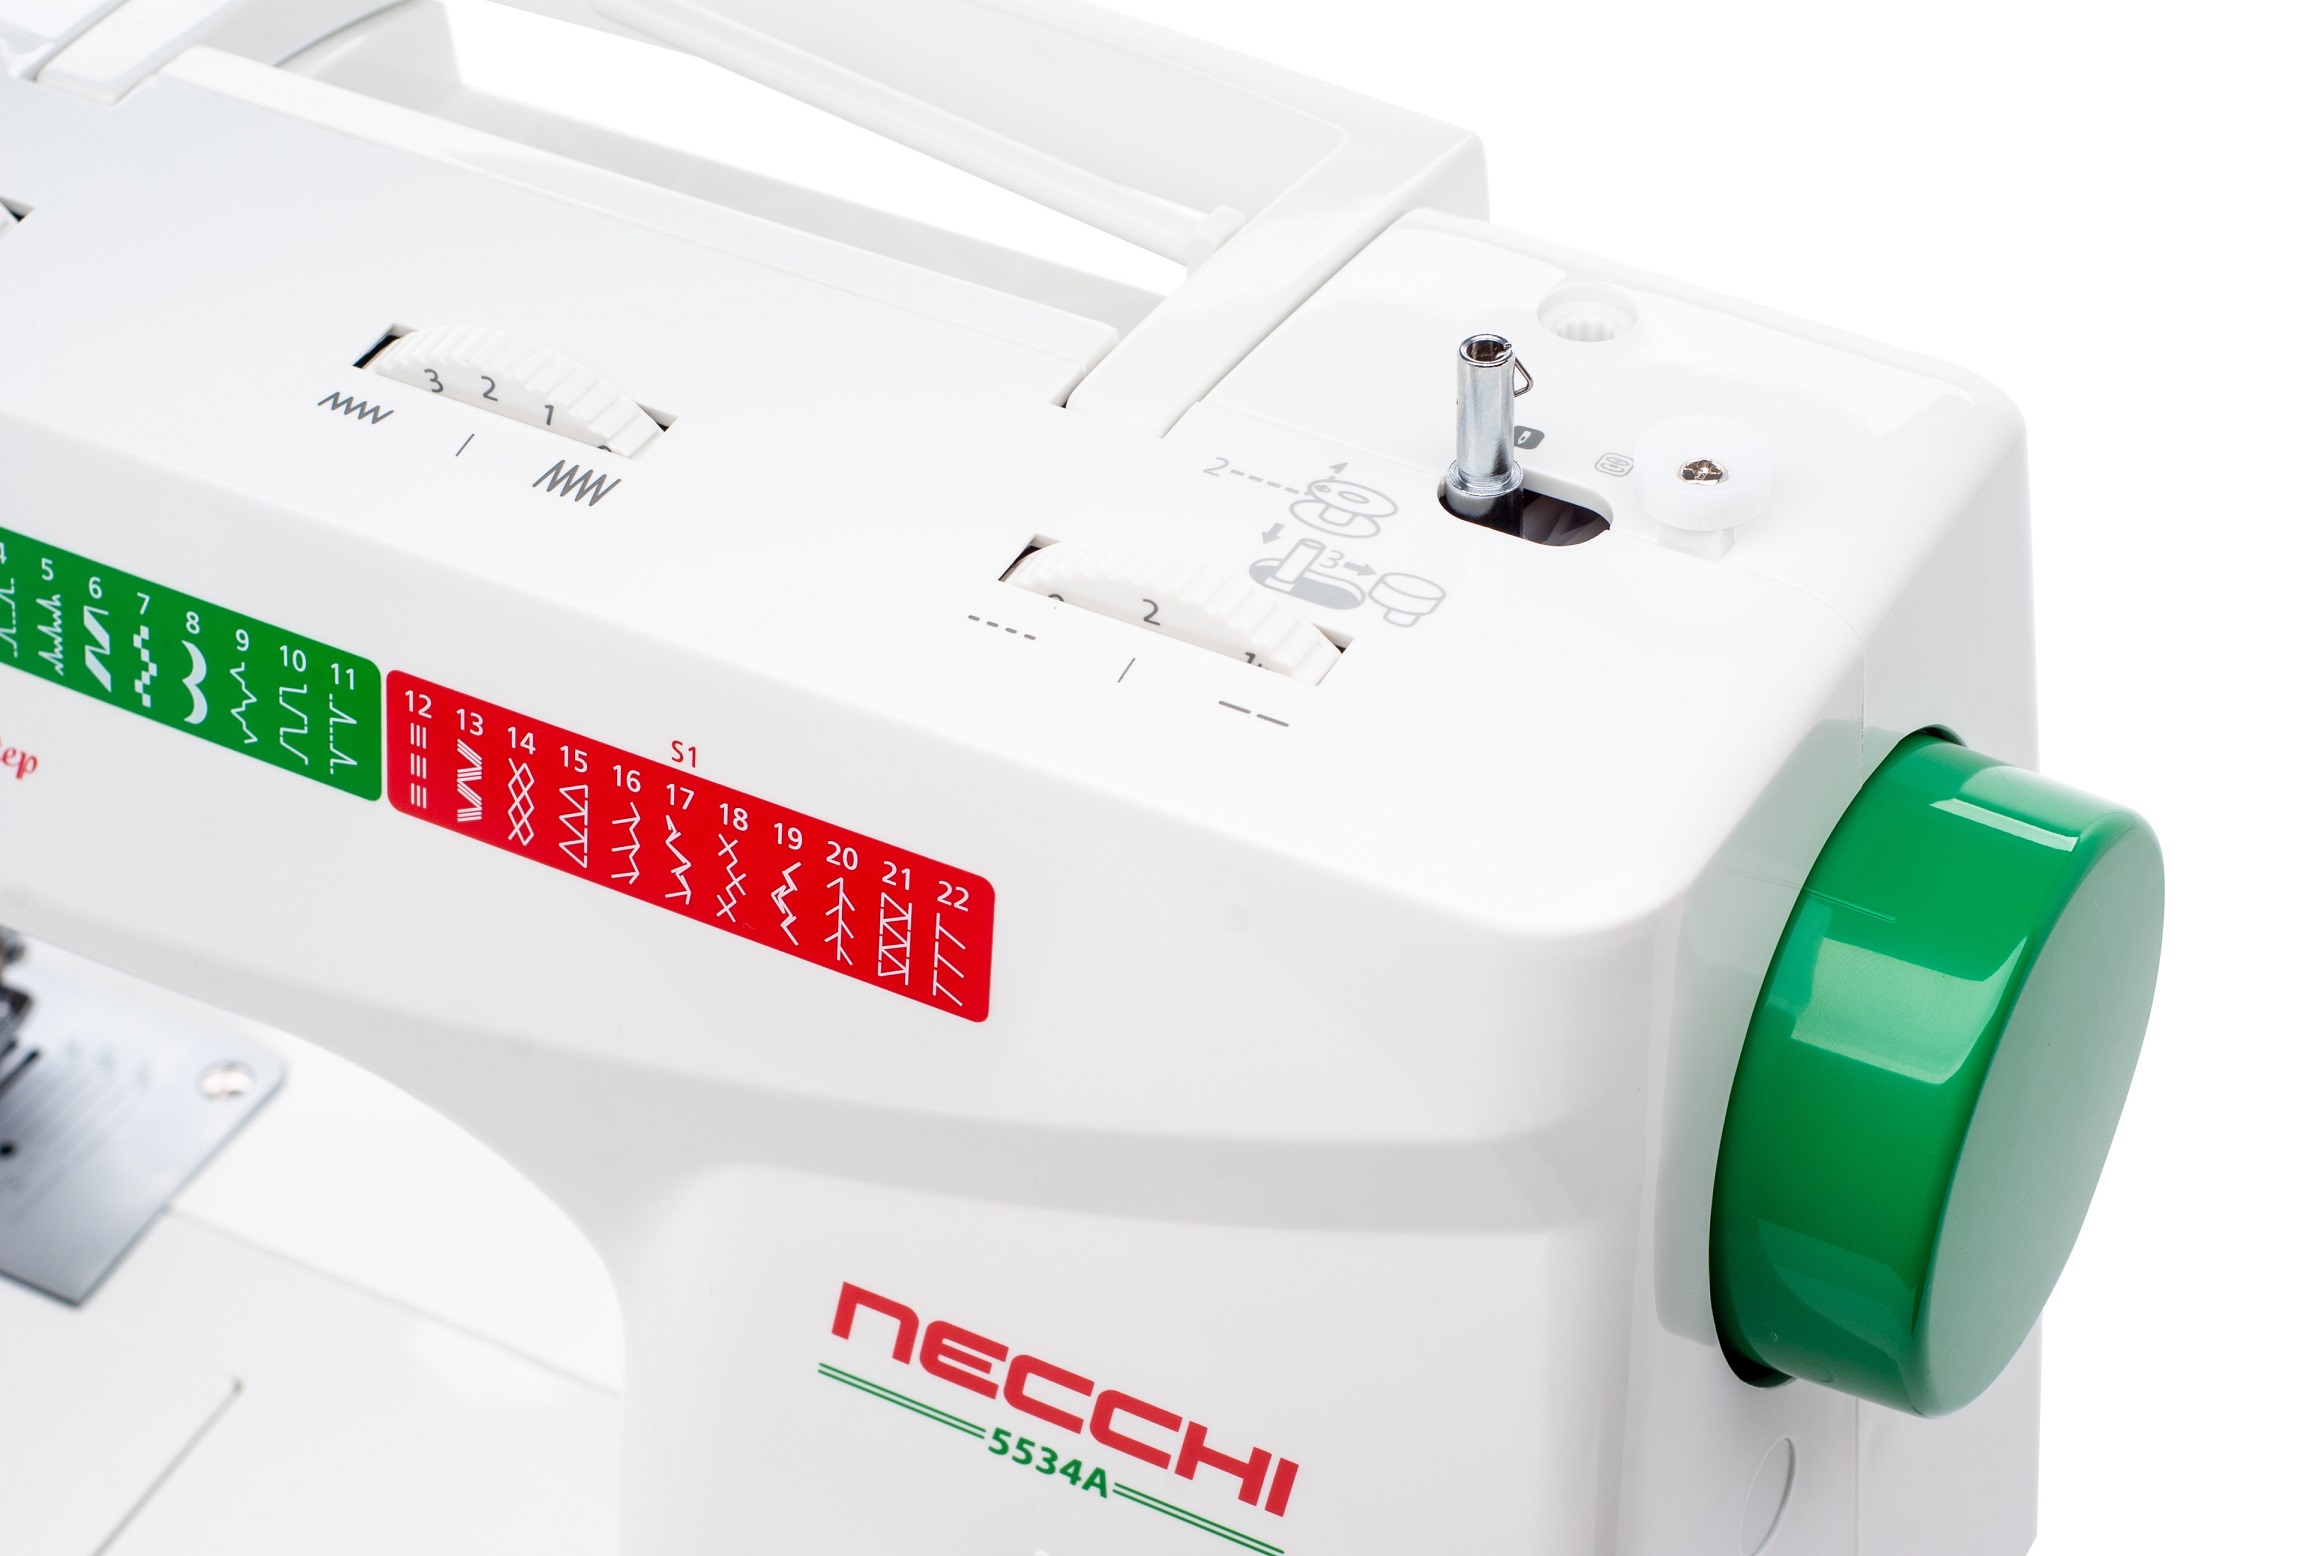 Швейная машина Necchi NECCHI 5534A - фото 2